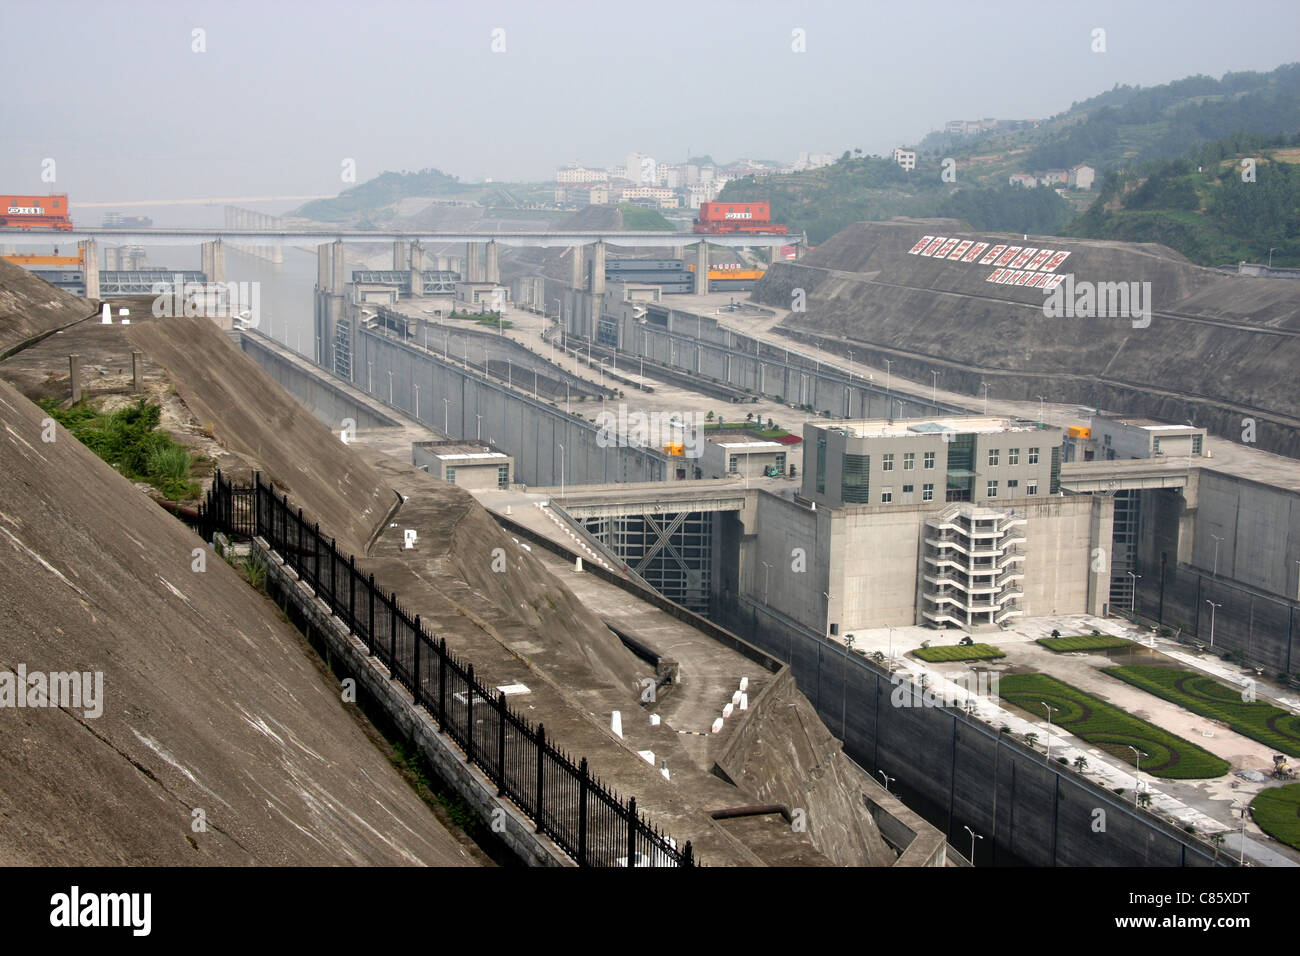 Looking upstream at the ship locks at Three Gorges Dam, Yangtze River, China Stock Photo